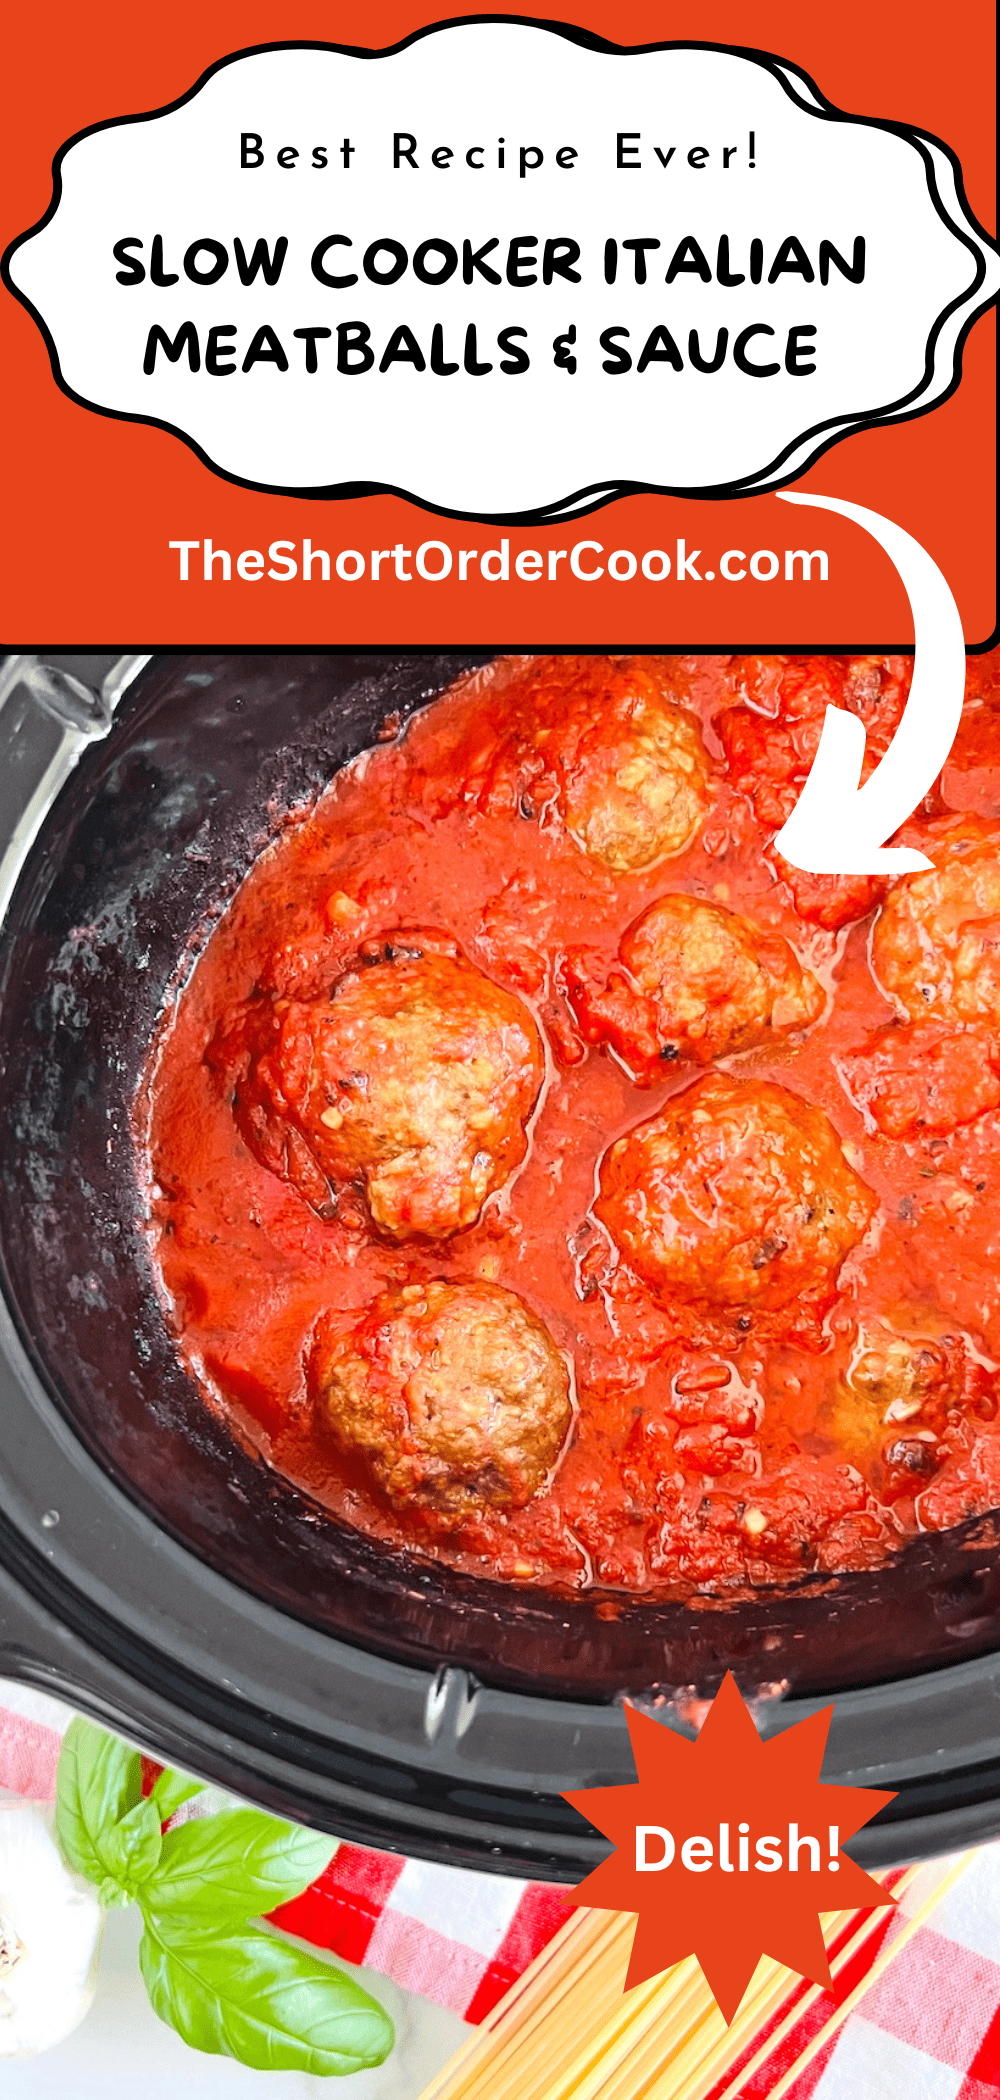 Slow Cooker Italian Meatballs & Sauce bubbling in the insert.